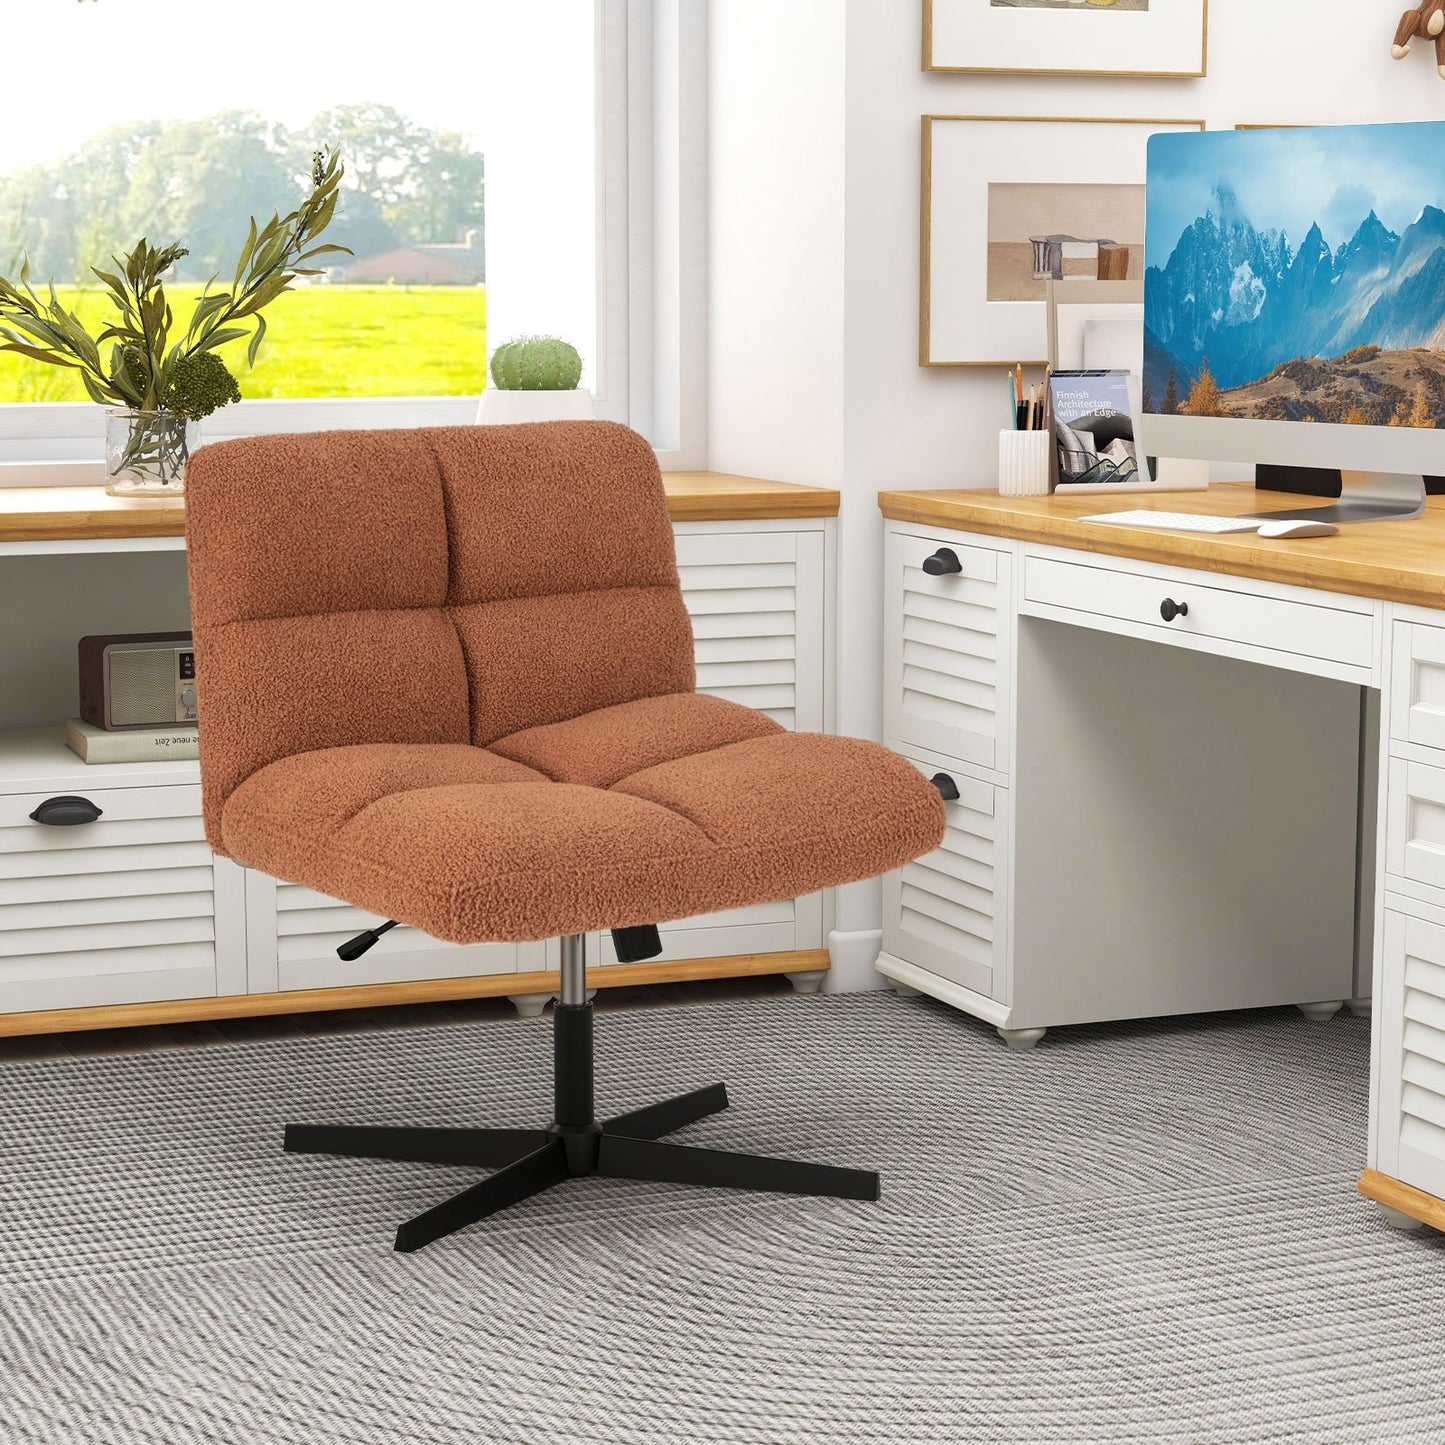 Office Armless Chair Cross Legged with Imitation Lamb Fleece and Adjustable Height, Brown